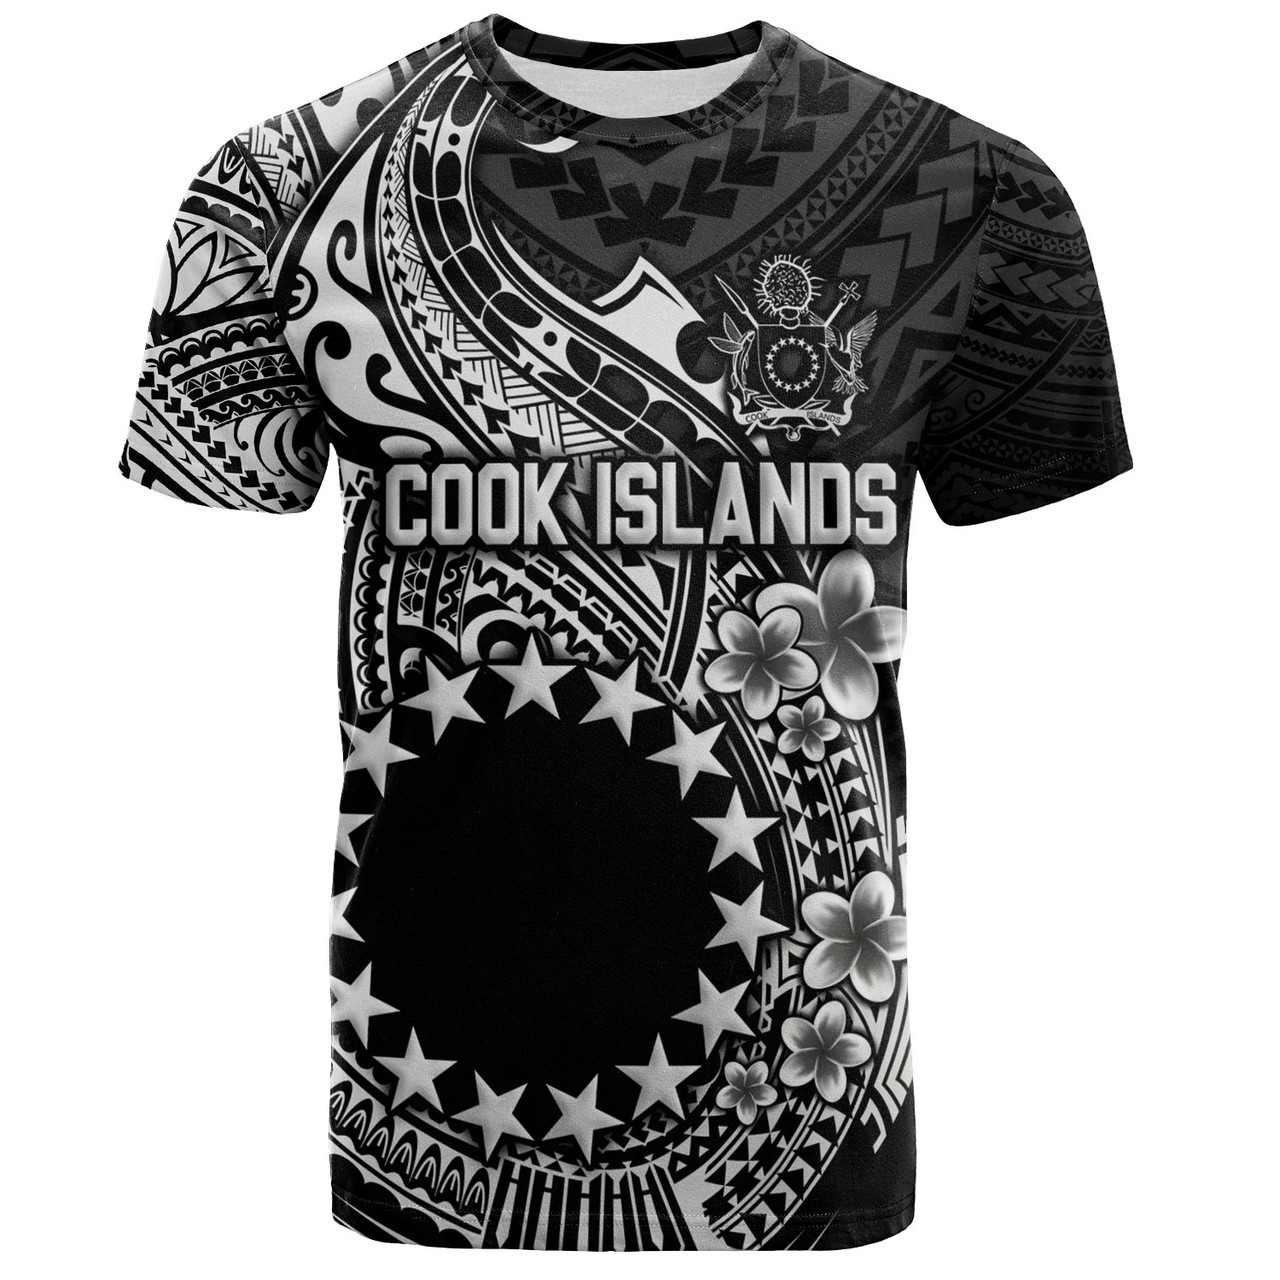 Cook Islands T-Shirt Plumeria Flowers Tribal Motif Design